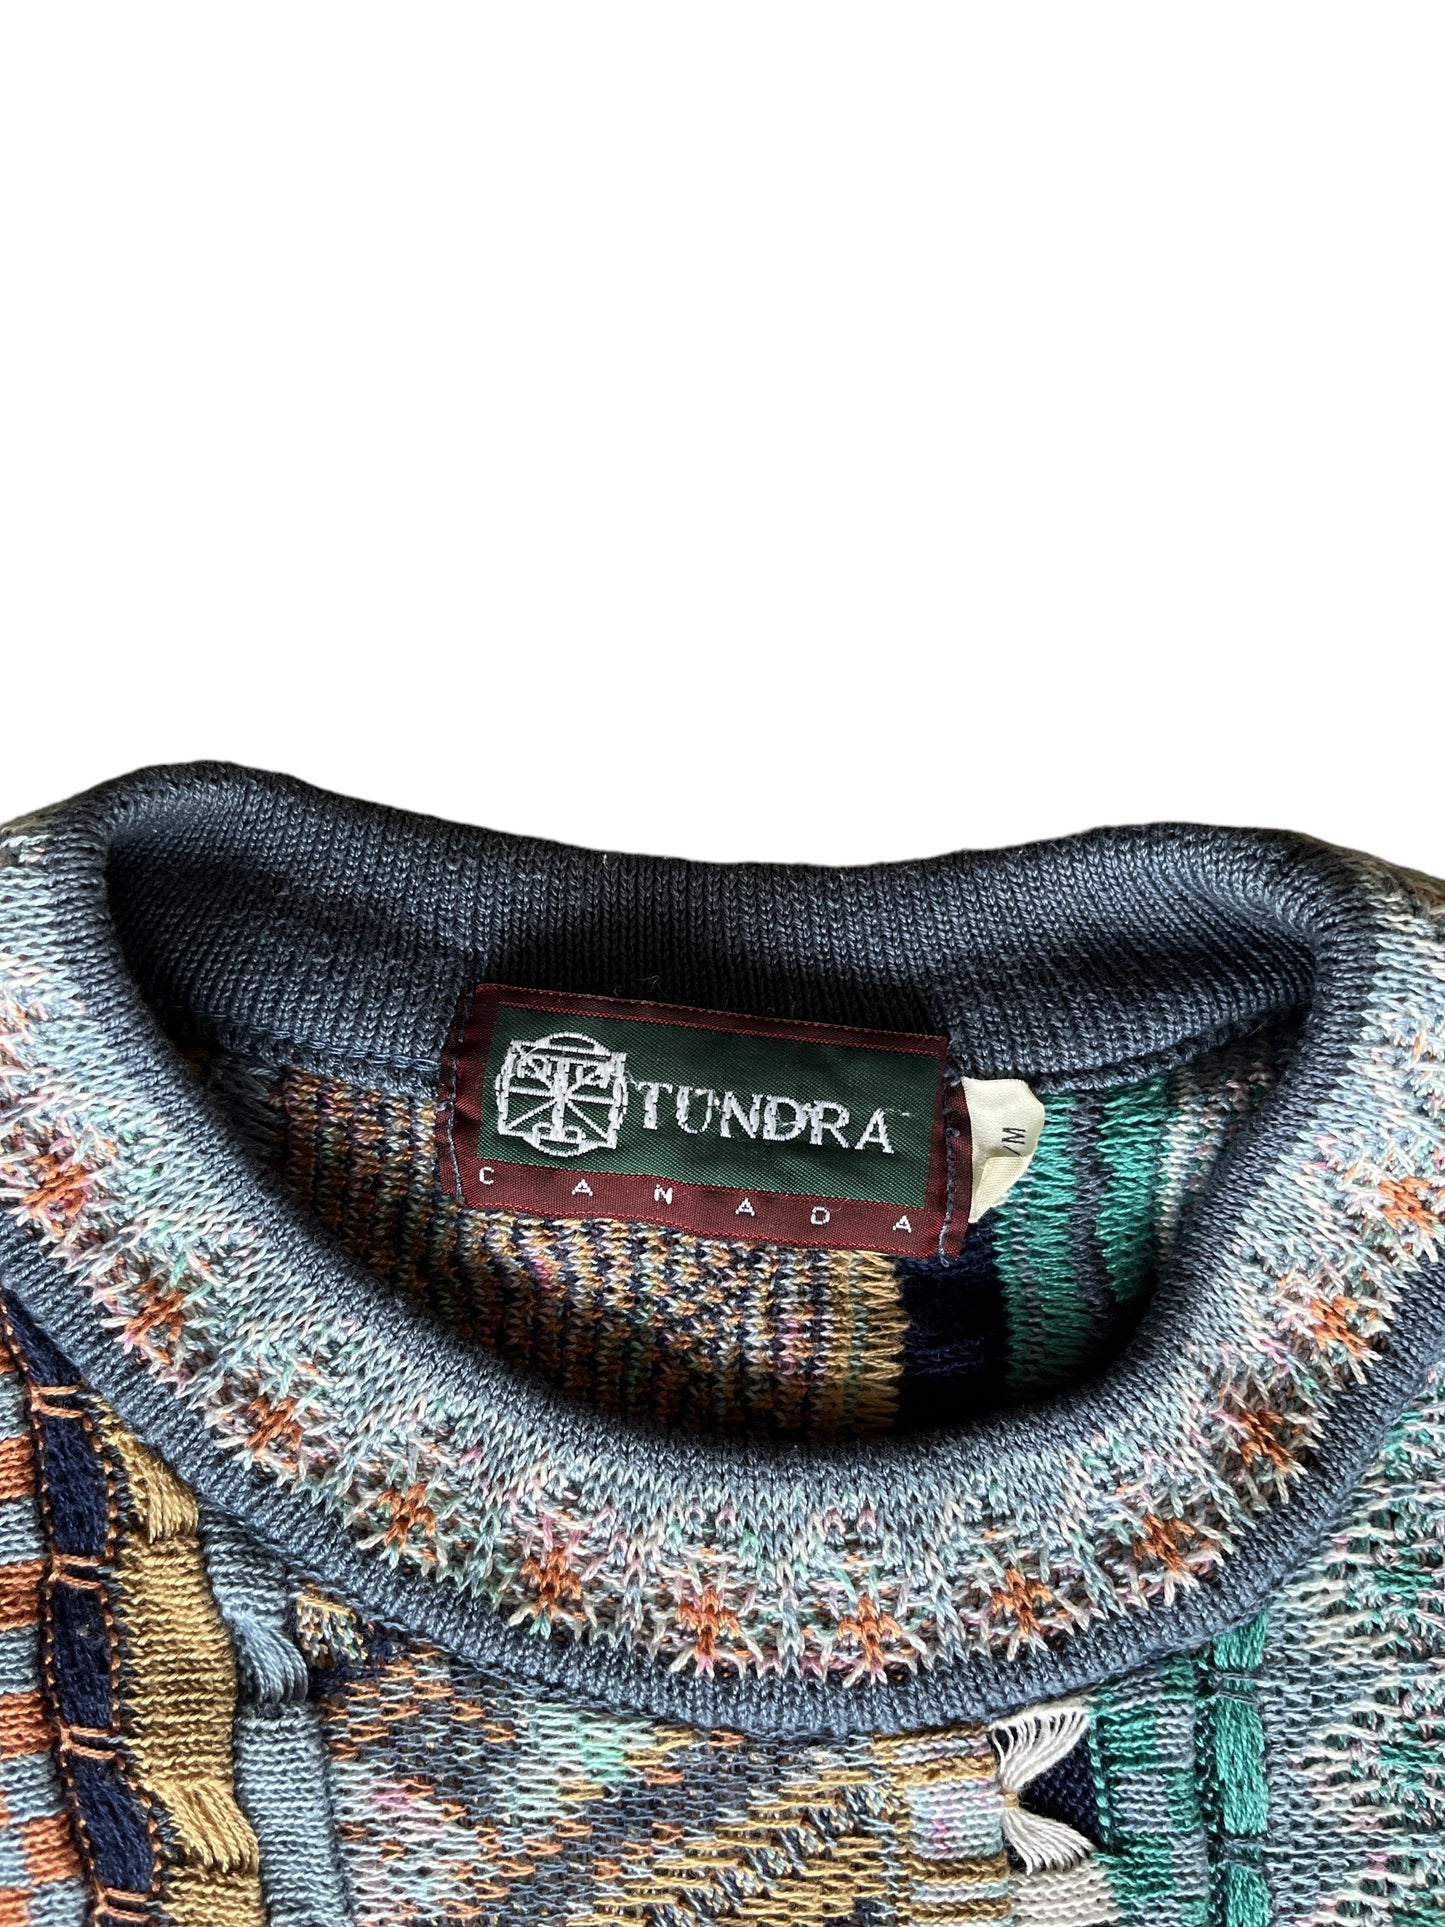 Vintage Tundra 3d Knit Sweater